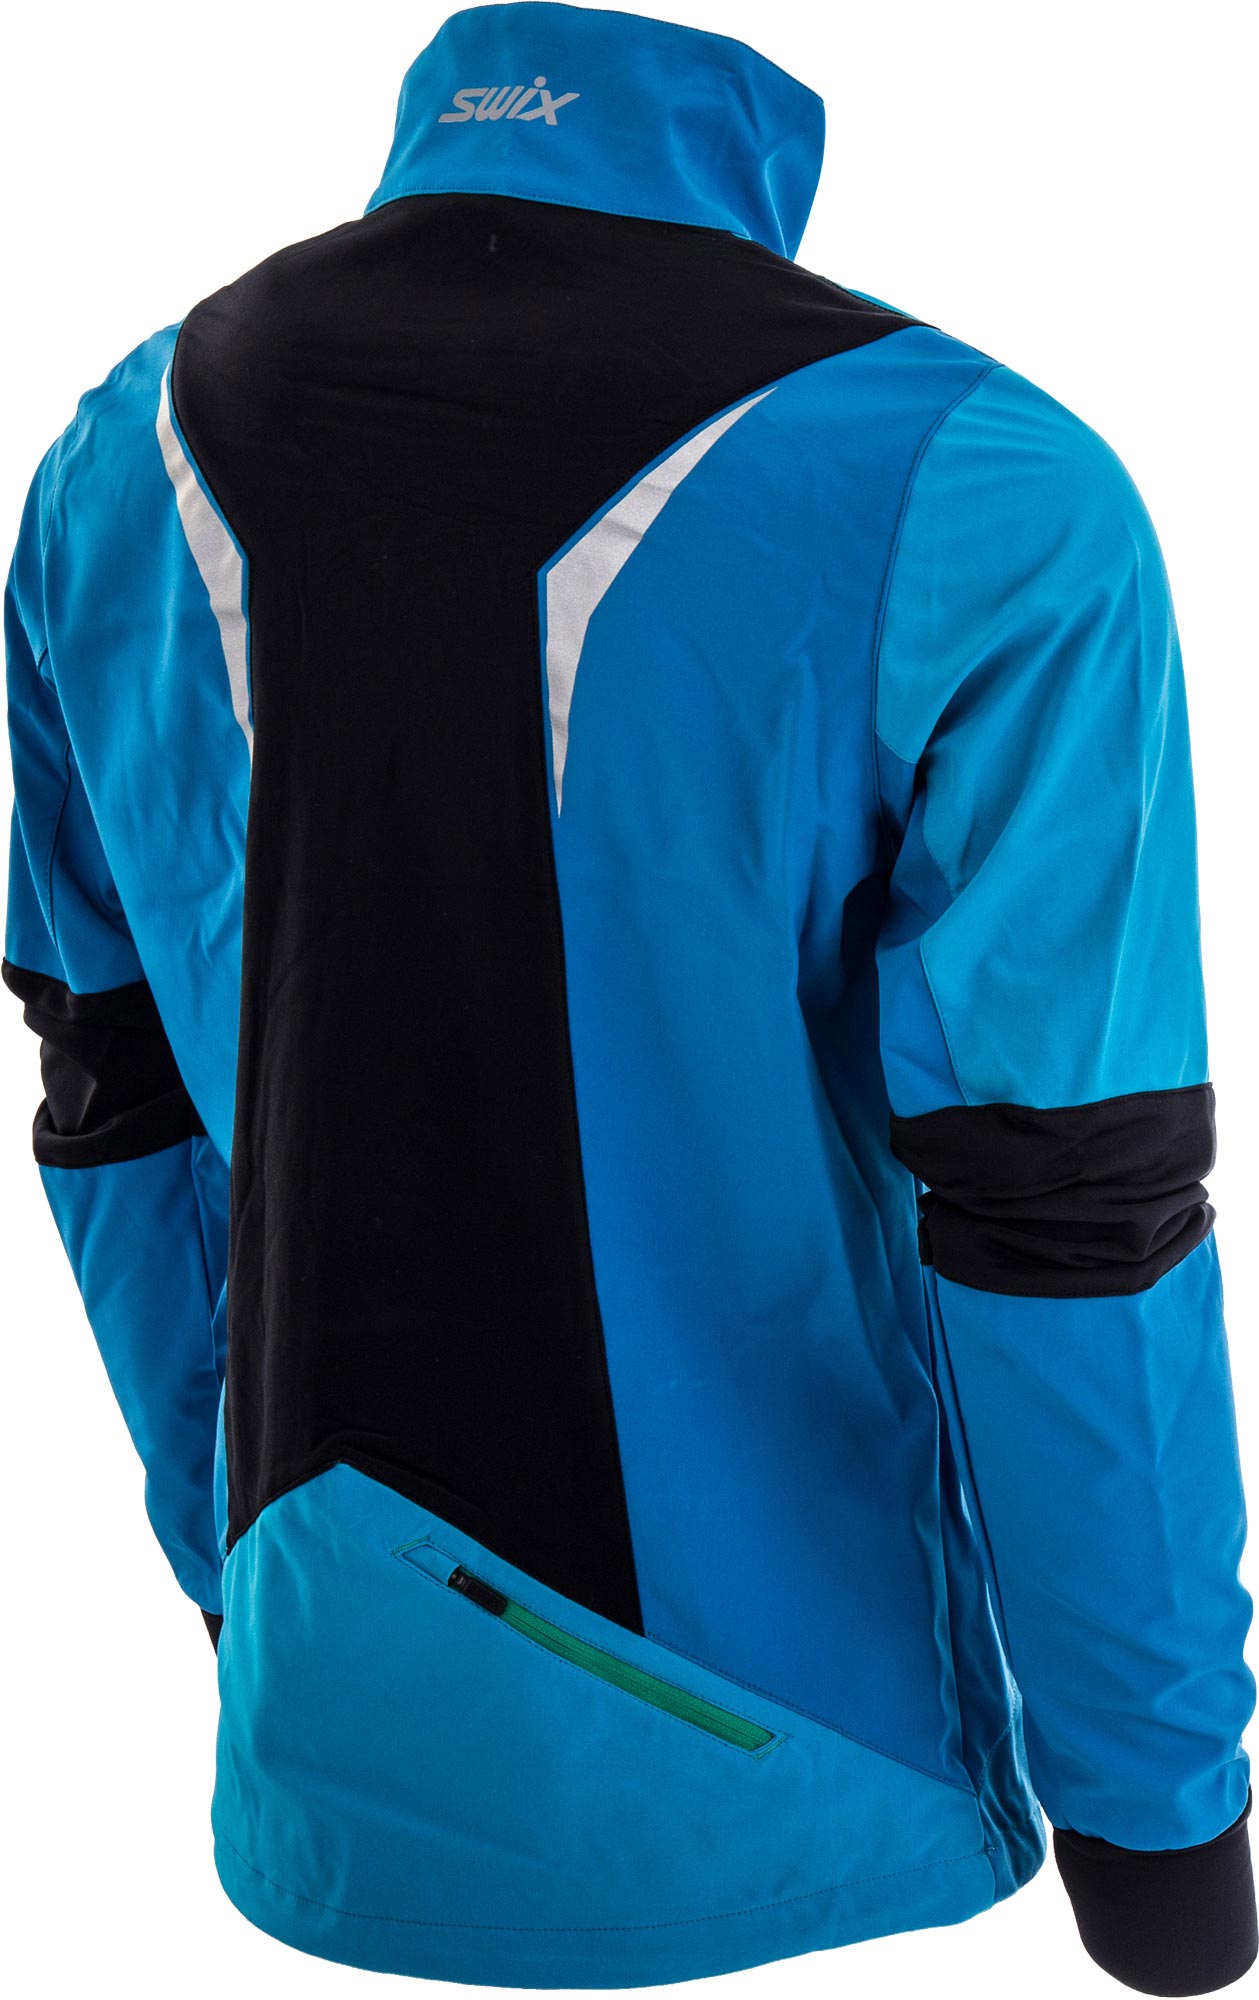 GELIO - Men's Sports Jacket